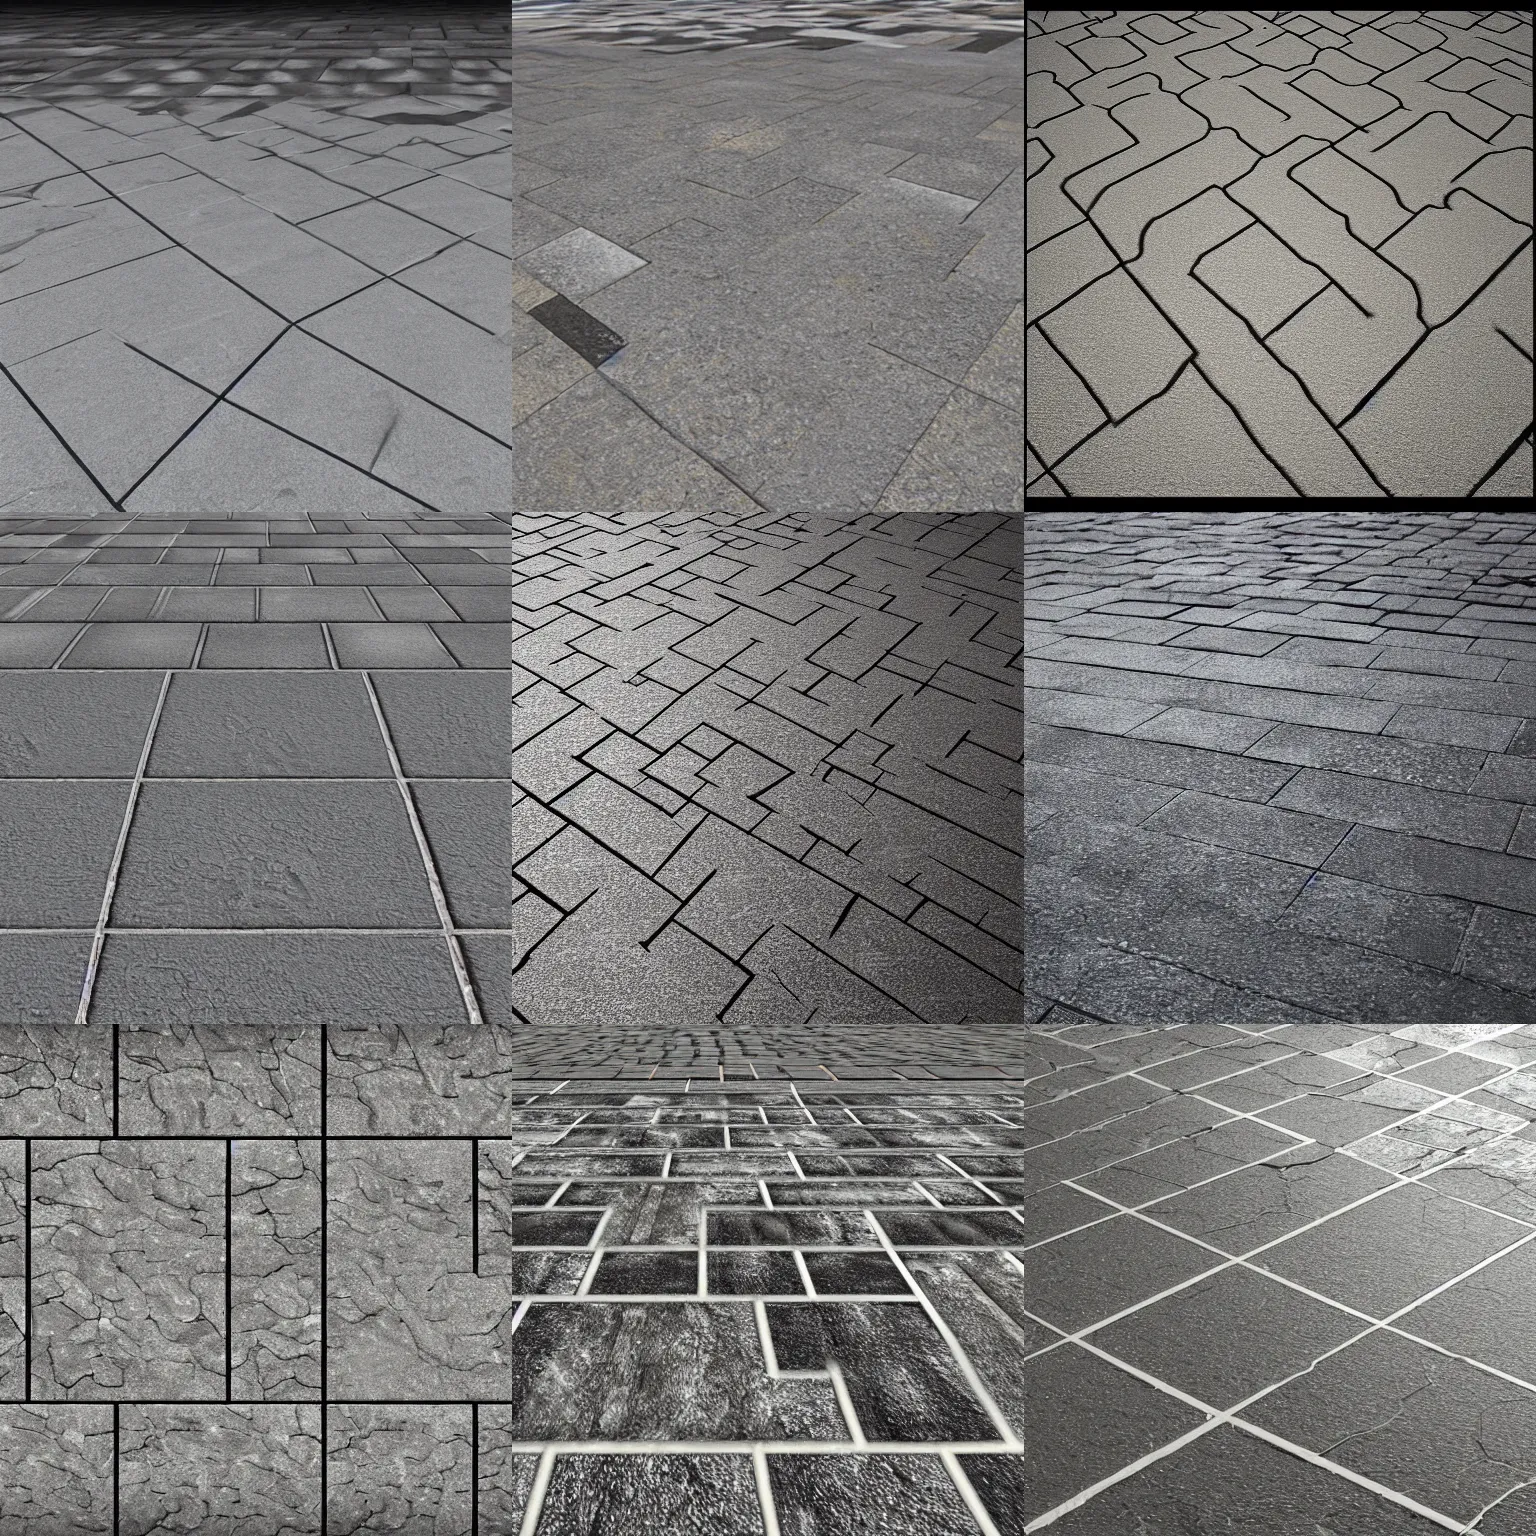 Prompt: photorealistic pavement texture